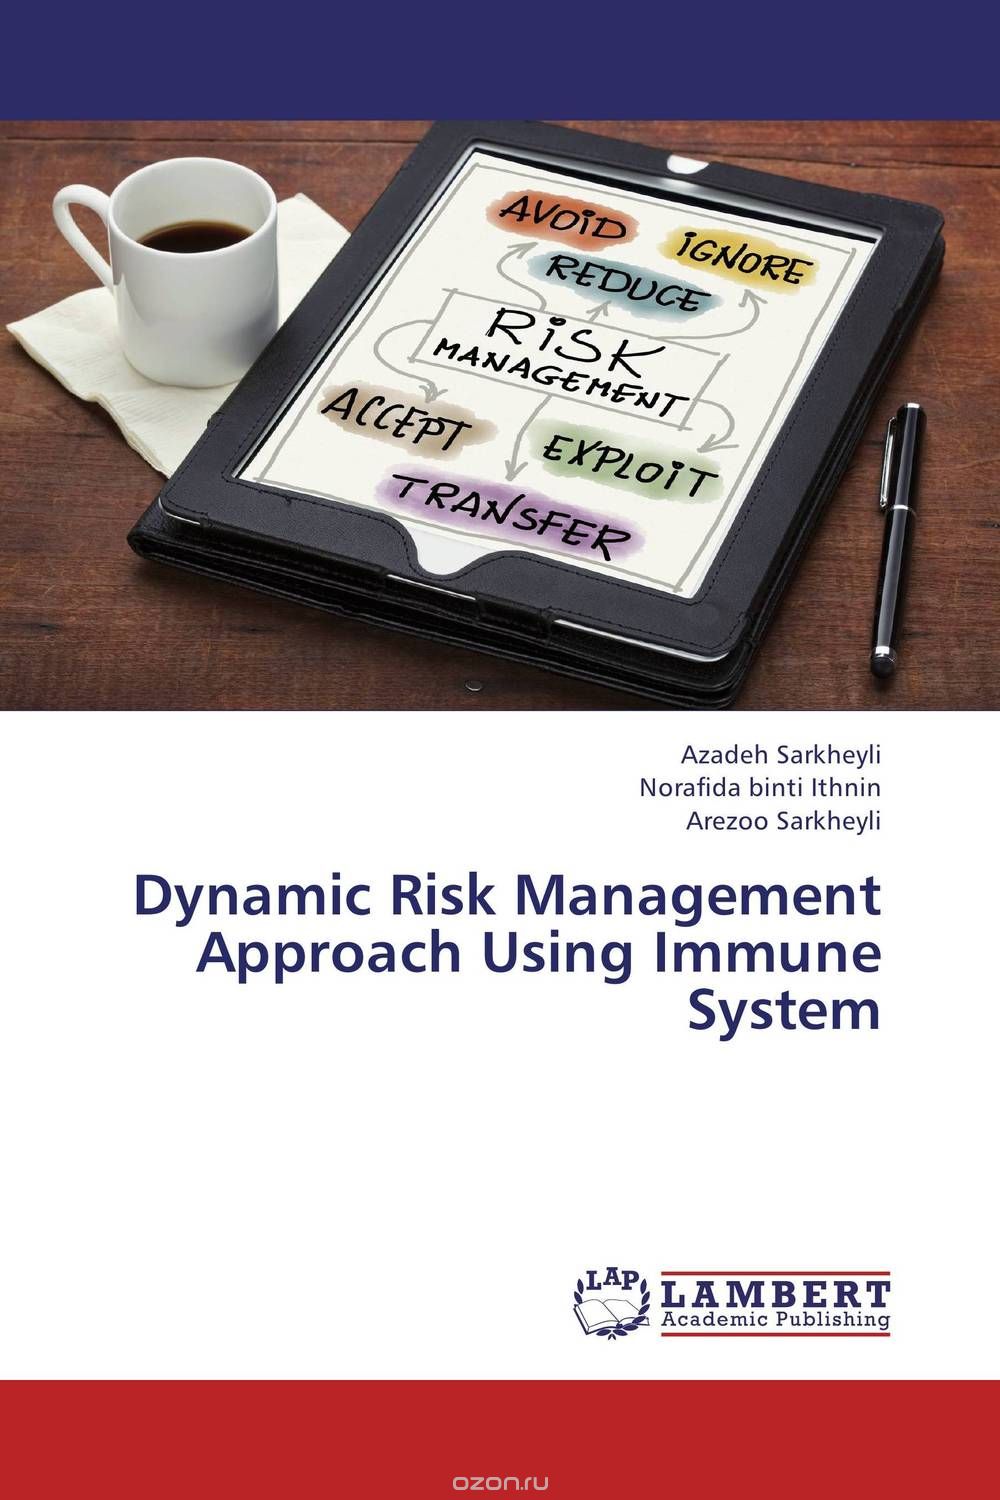 Скачать книгу "Dynamic Risk Management Approach Using Immune System"